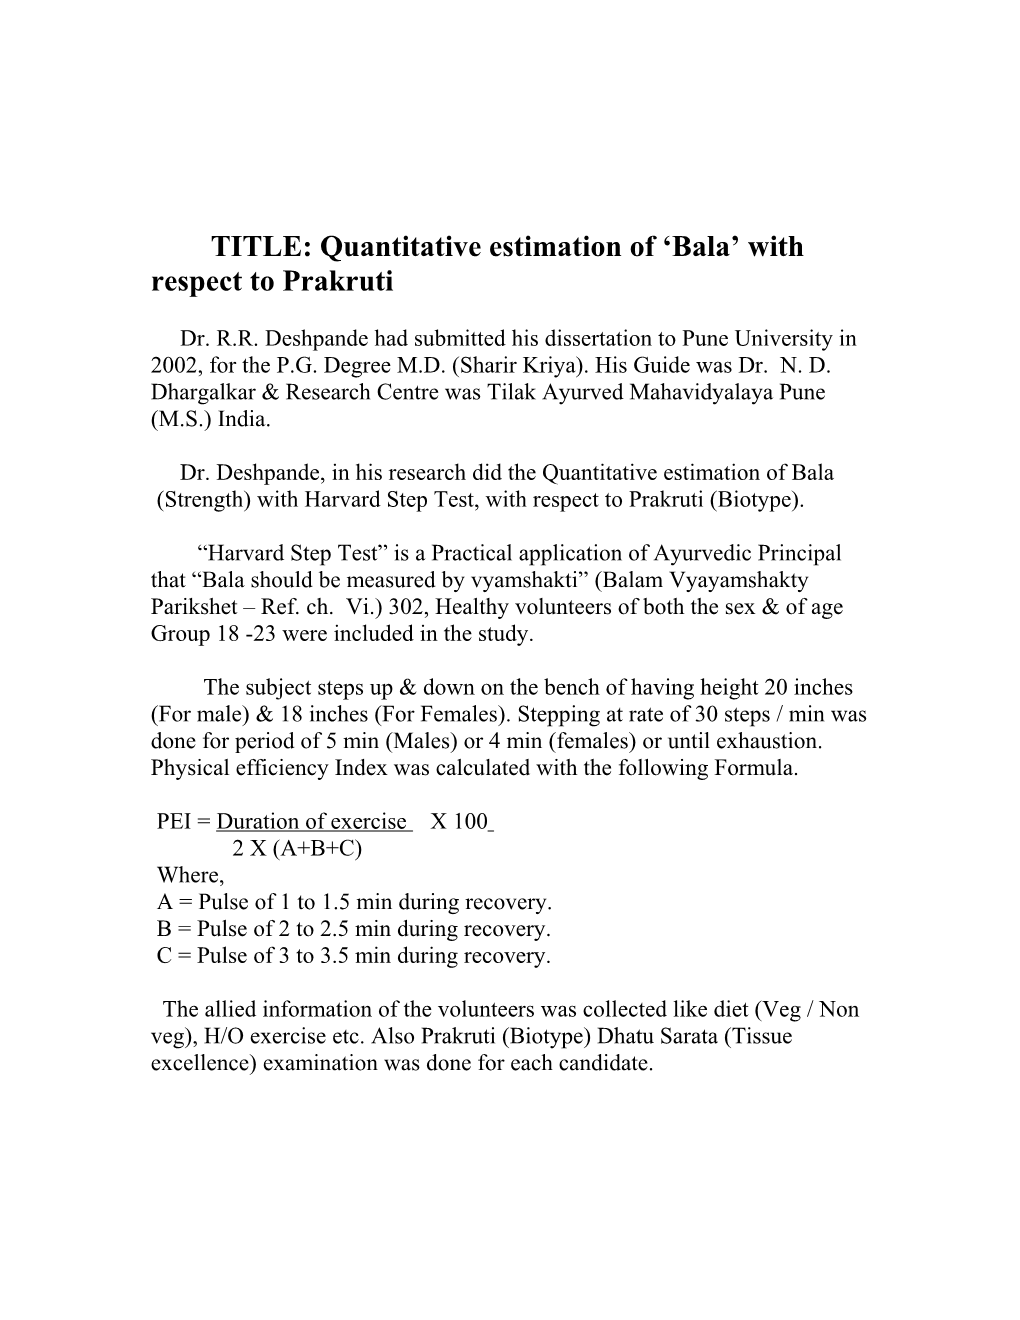 TITLE : Quantitative Estimation of Bala with Respect to Prakriti